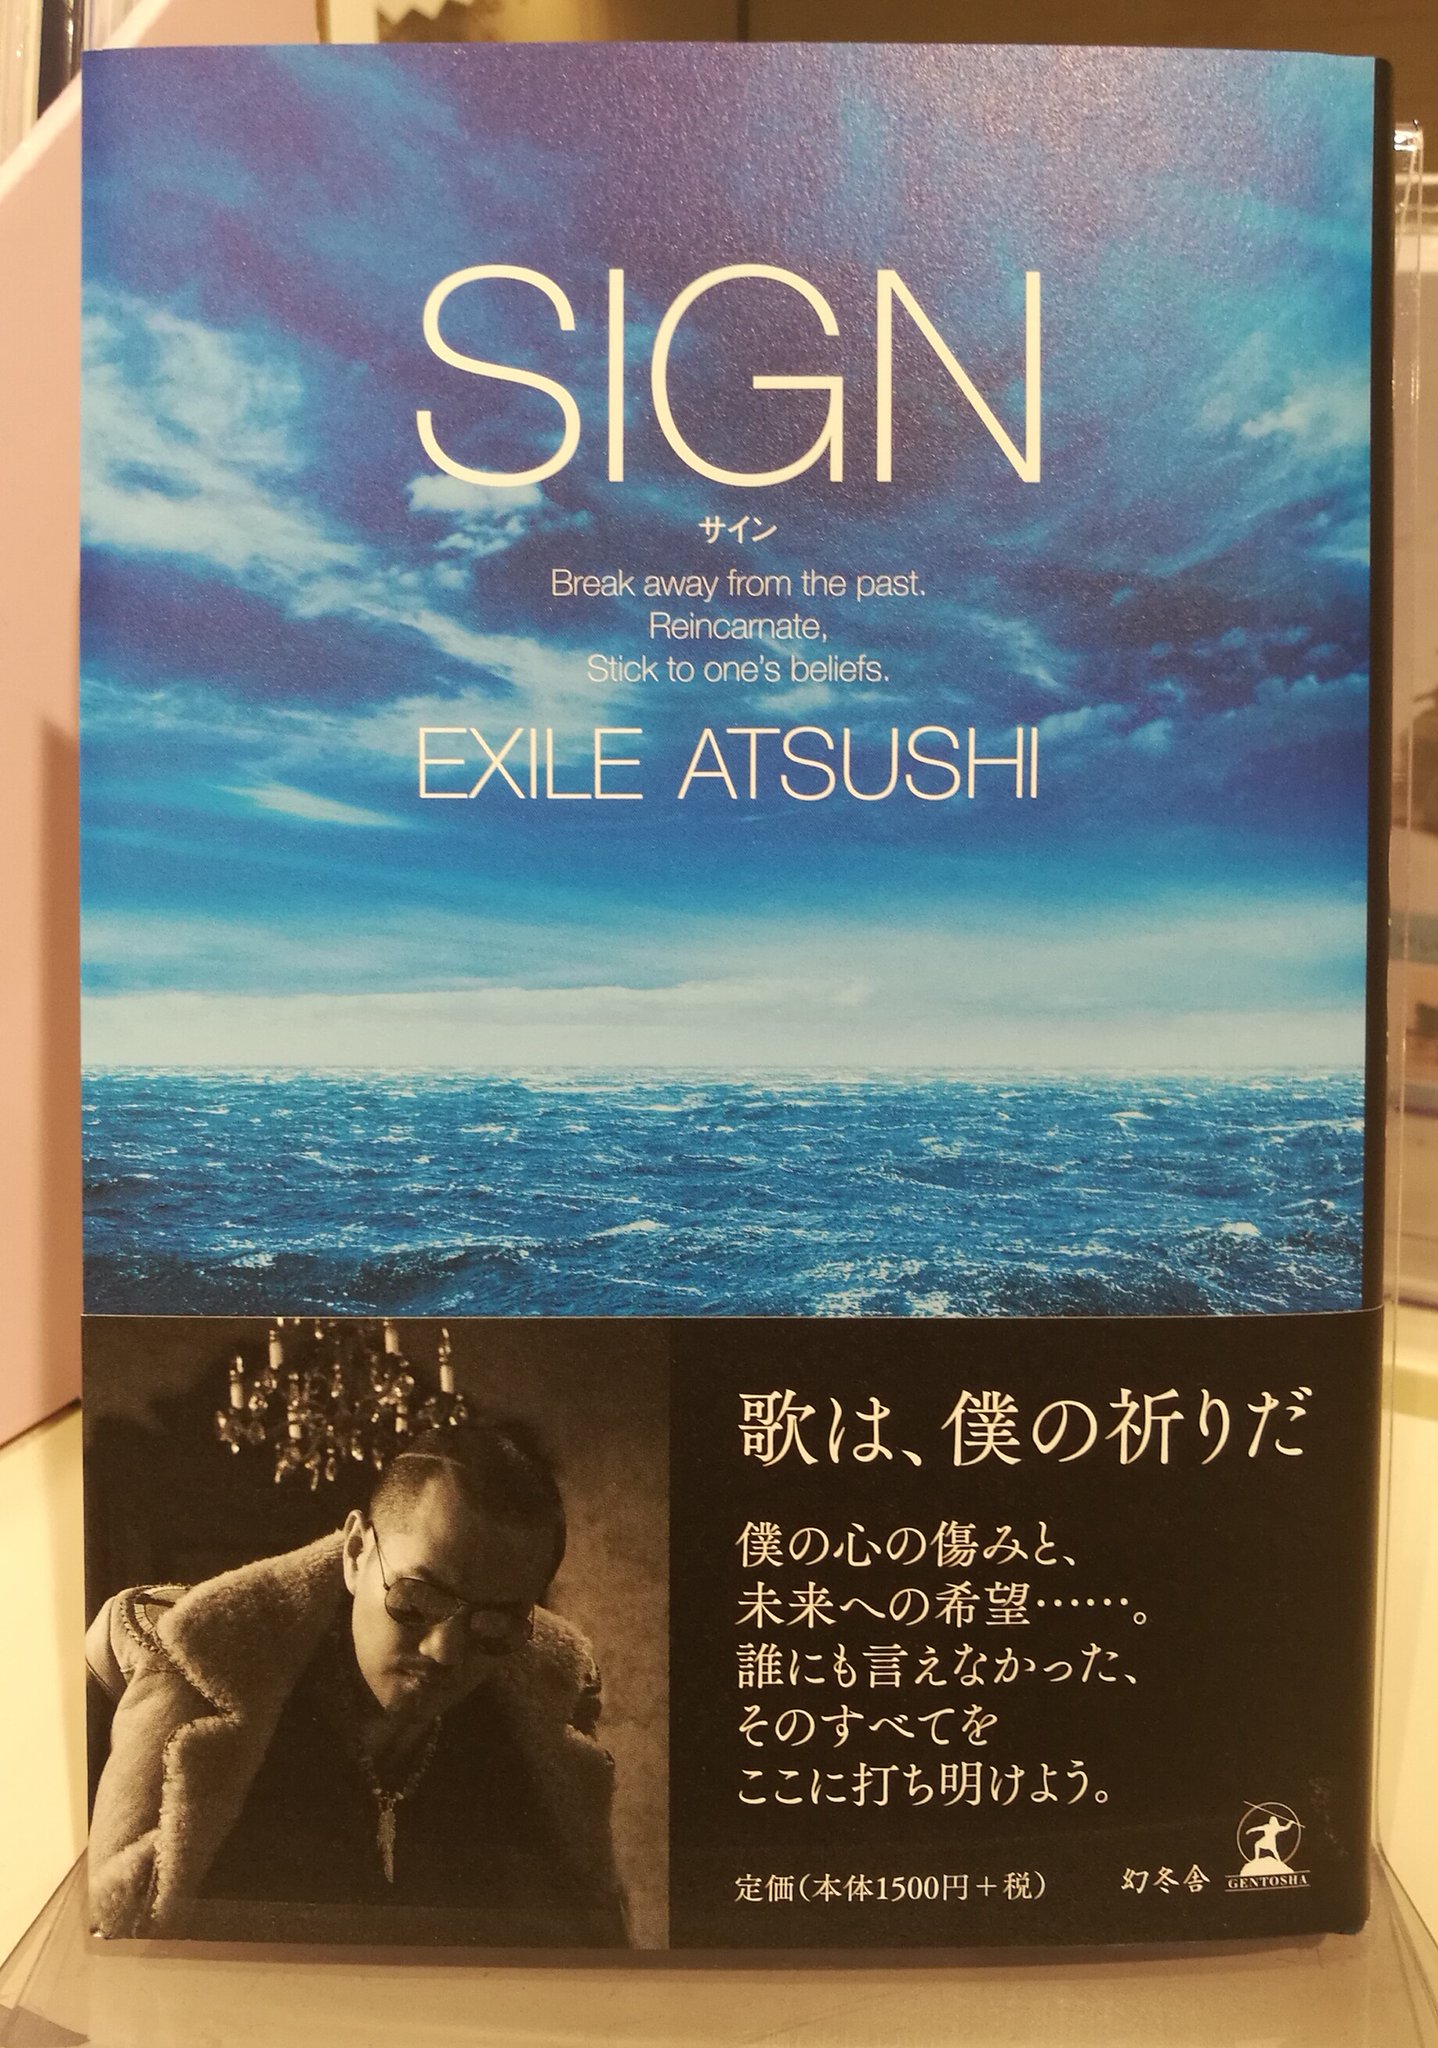 Hmv Books Hakata 本日入荷 Exile Atsushi著 Sign サイン 歌は 僕の祈りだ Exileデビュー周年を控え 40歳を迎えた孤高のボーカリスト Exile Atsushi 初の著書 天音 から7年半ぶり 待望の最新エッセイが登場 Exile Atsushi Sign